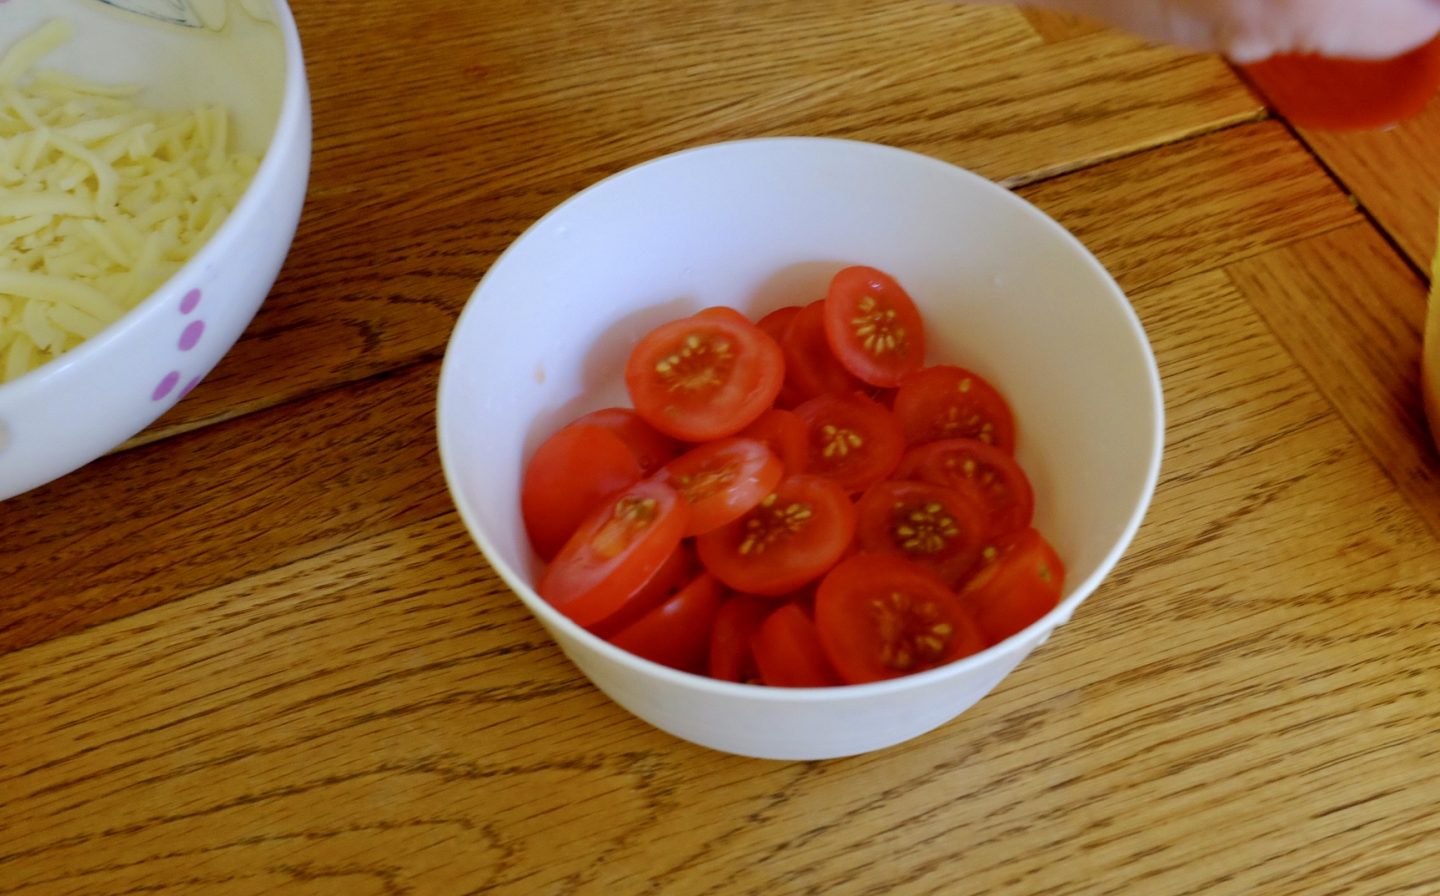 piccolo tomatoes